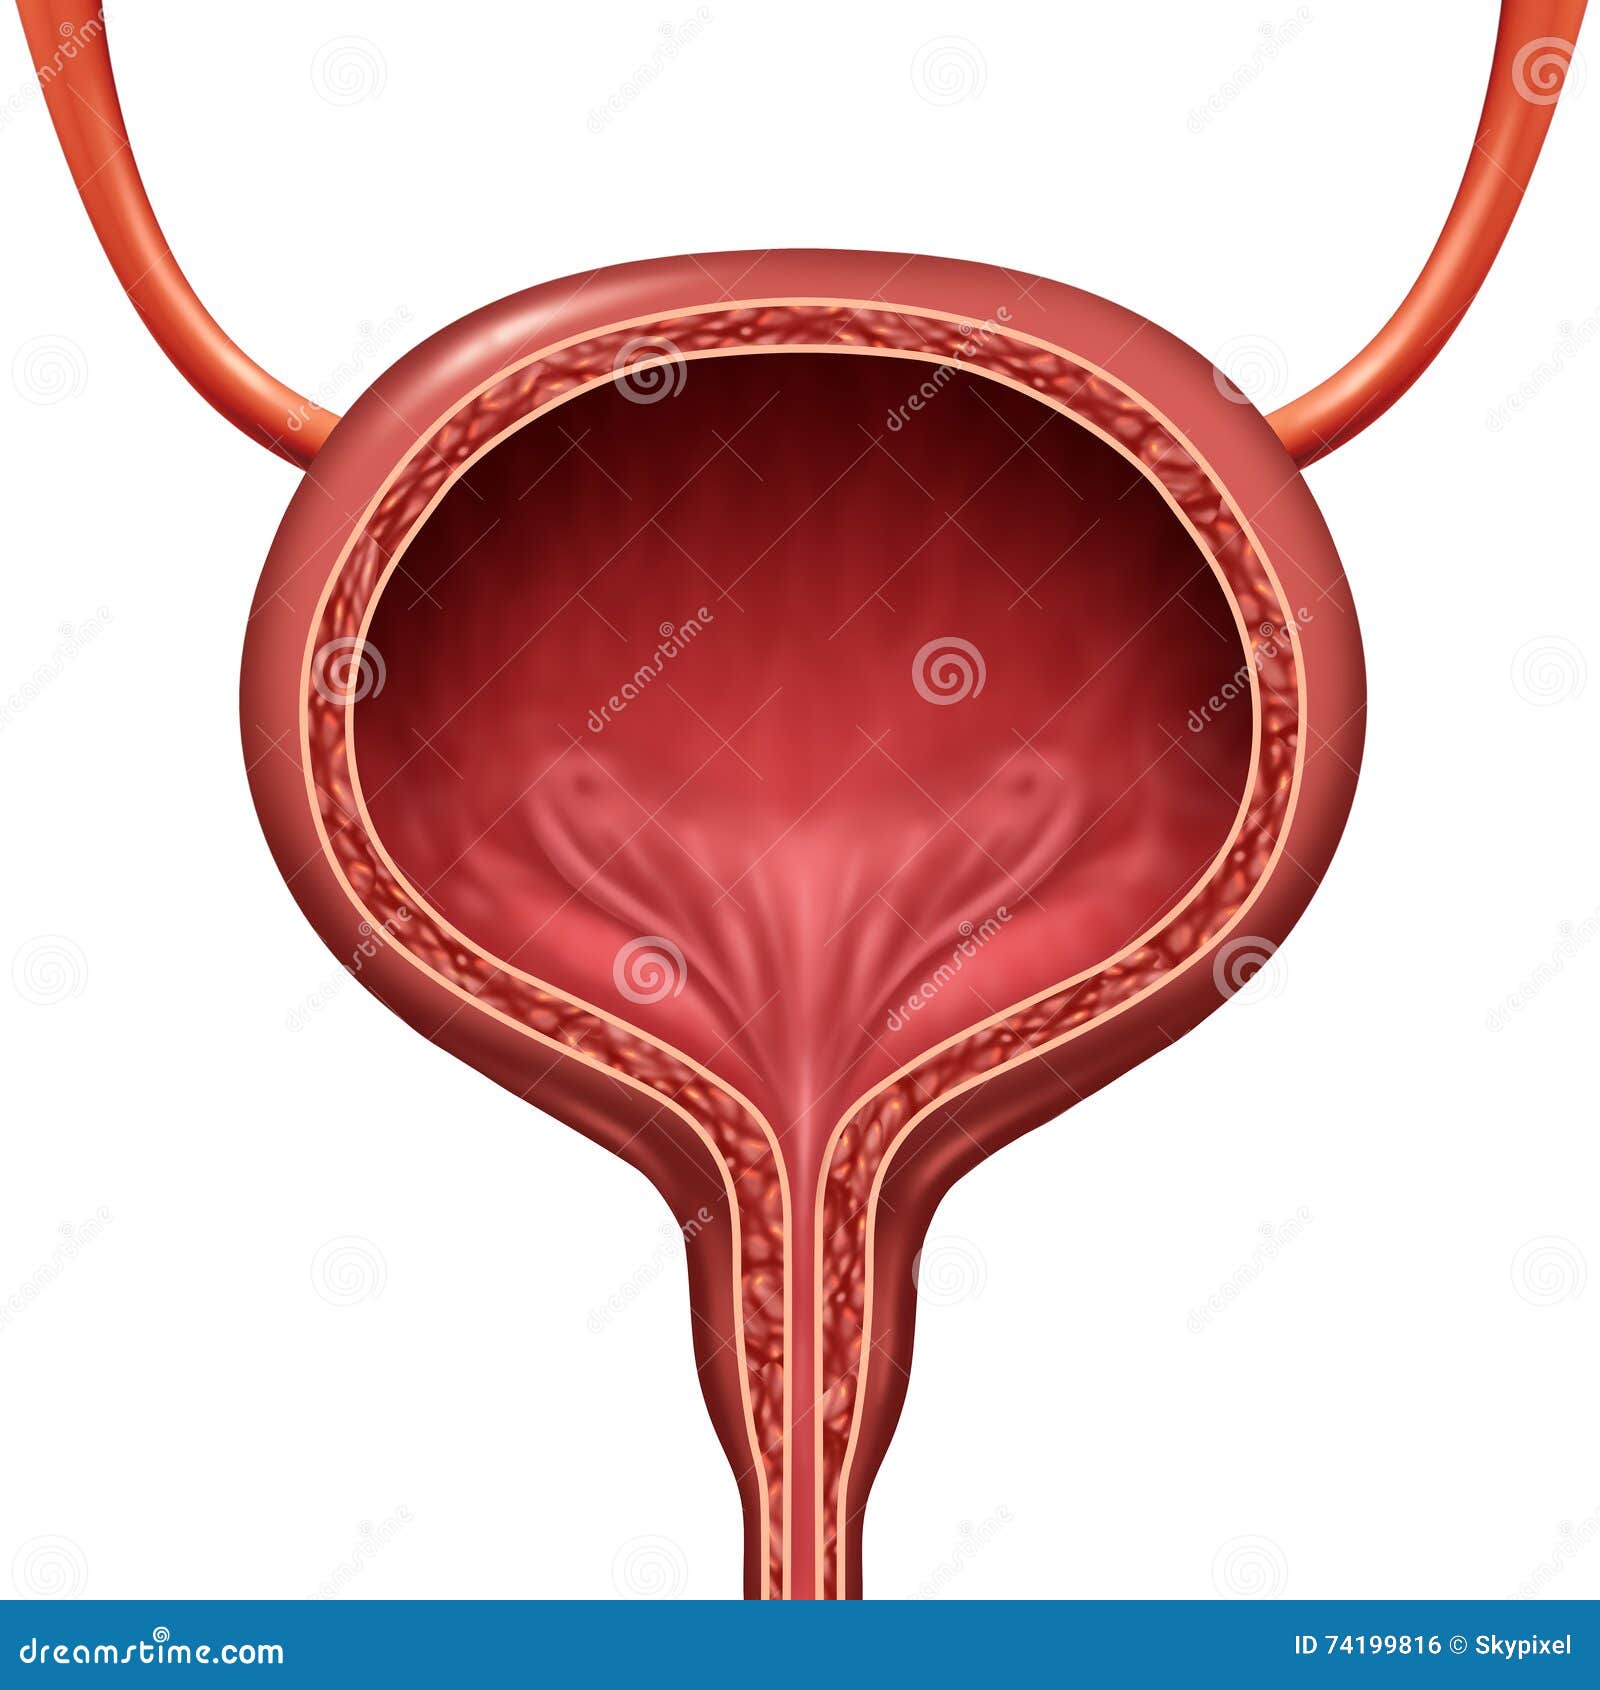 Human Urinary System Labelled Diagram Cartoon Vector | CartoonDealer